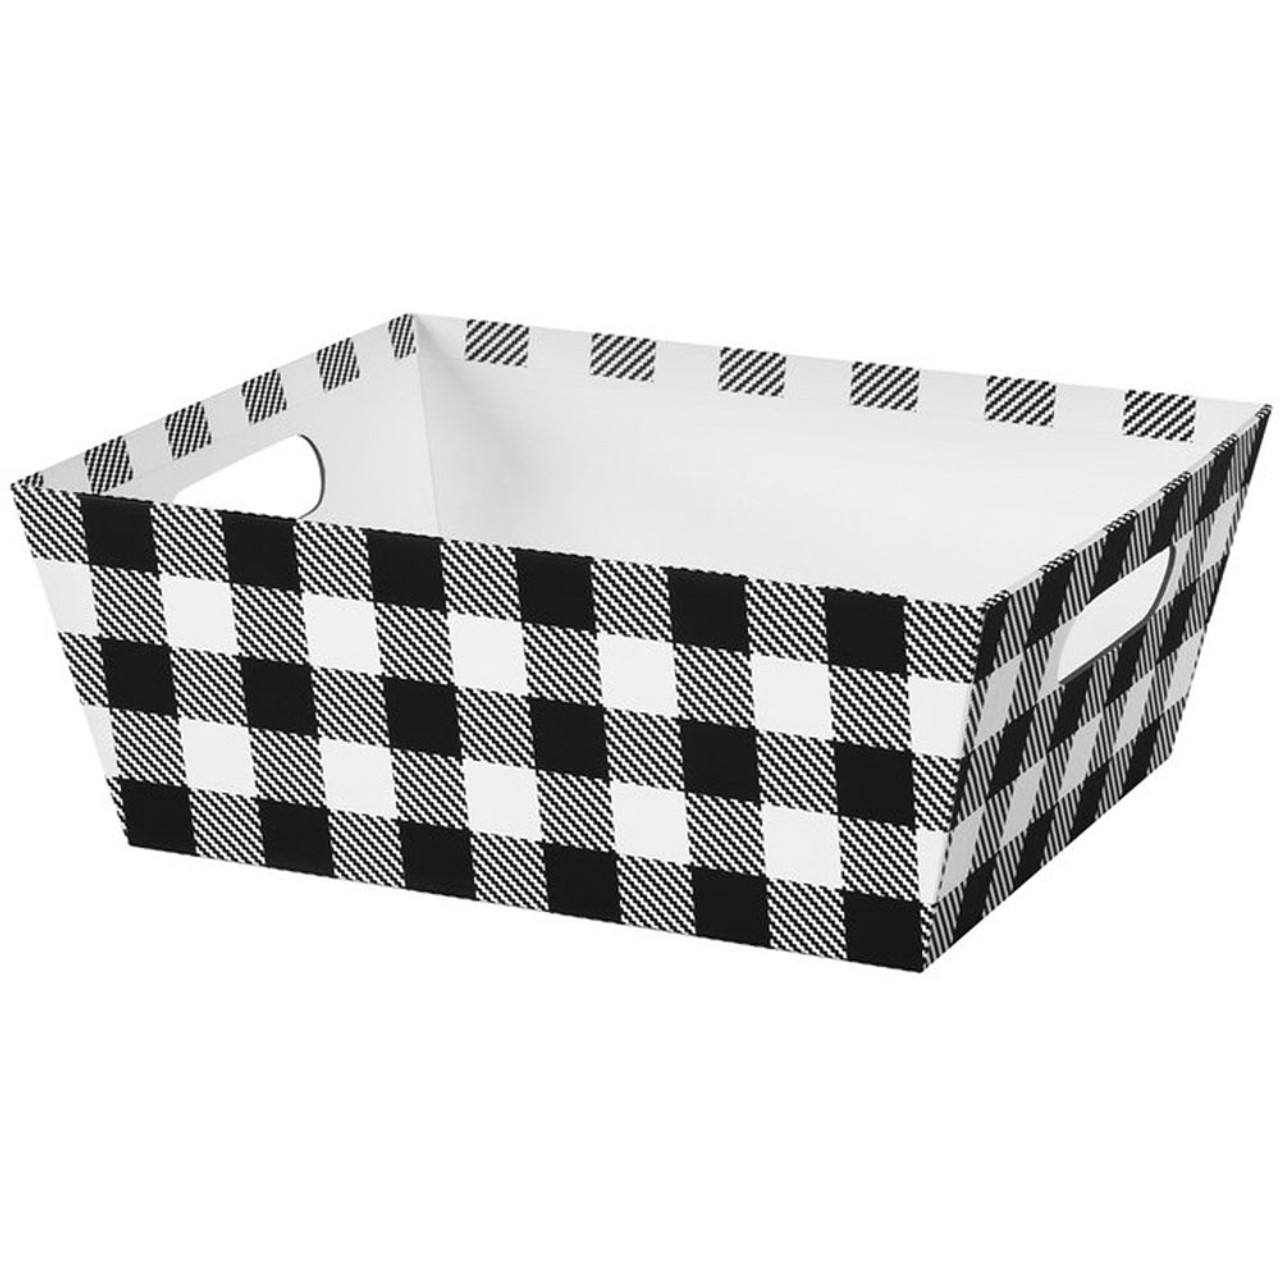 9"l x 7"w x 3-1/2"h Black and White Plaid Basket Tray